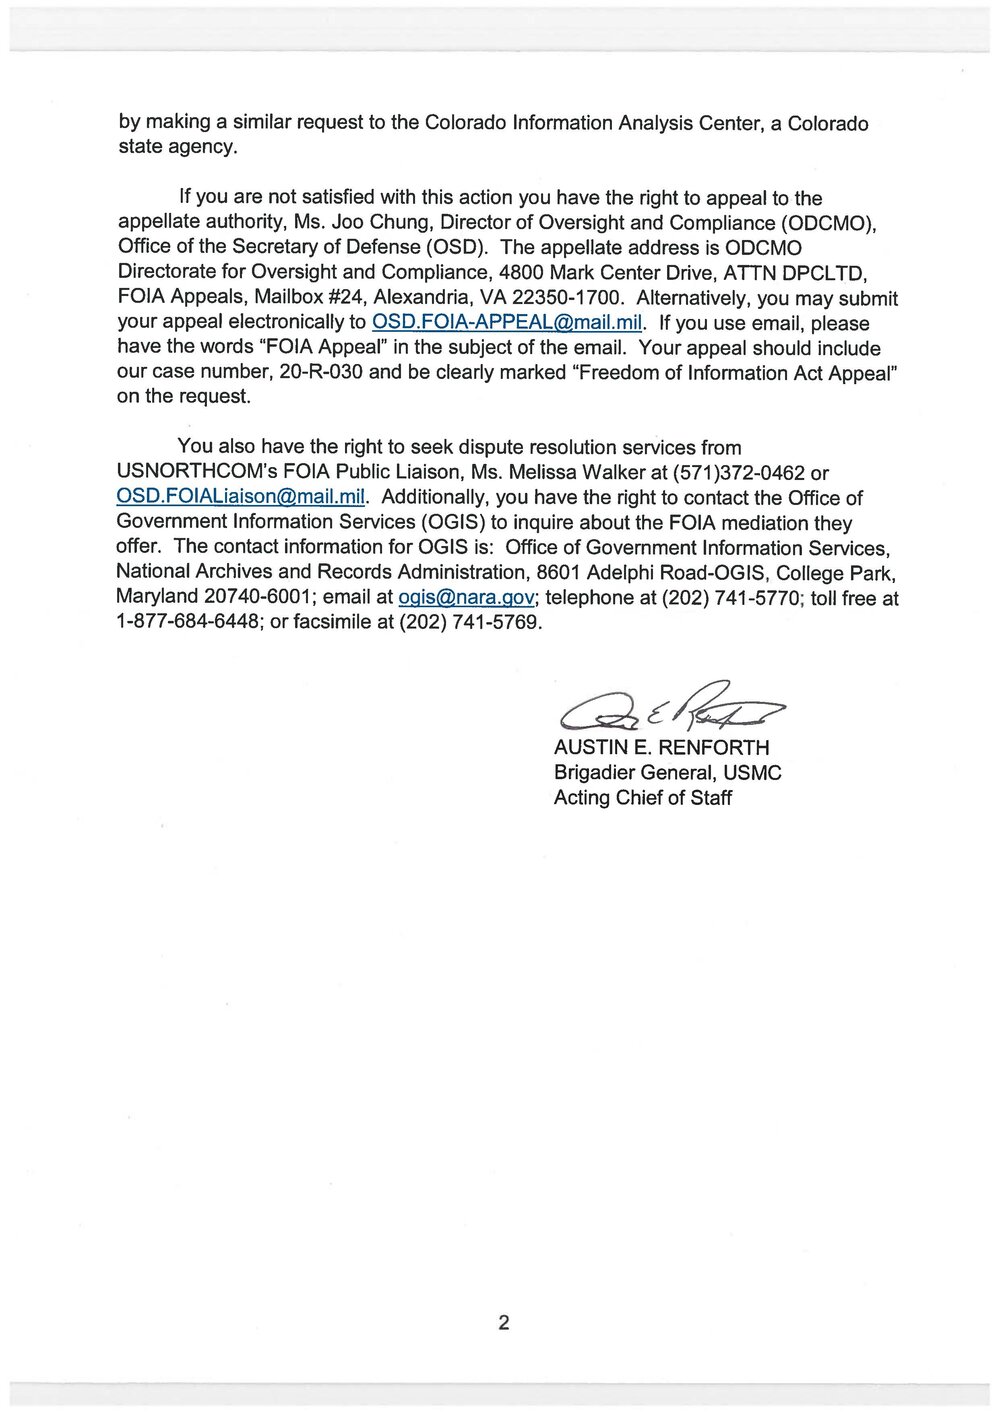 USNORTHCOM [DRONES, ADDRESS REMOVED] 20-R-030 Response Letter Page_2.jpg